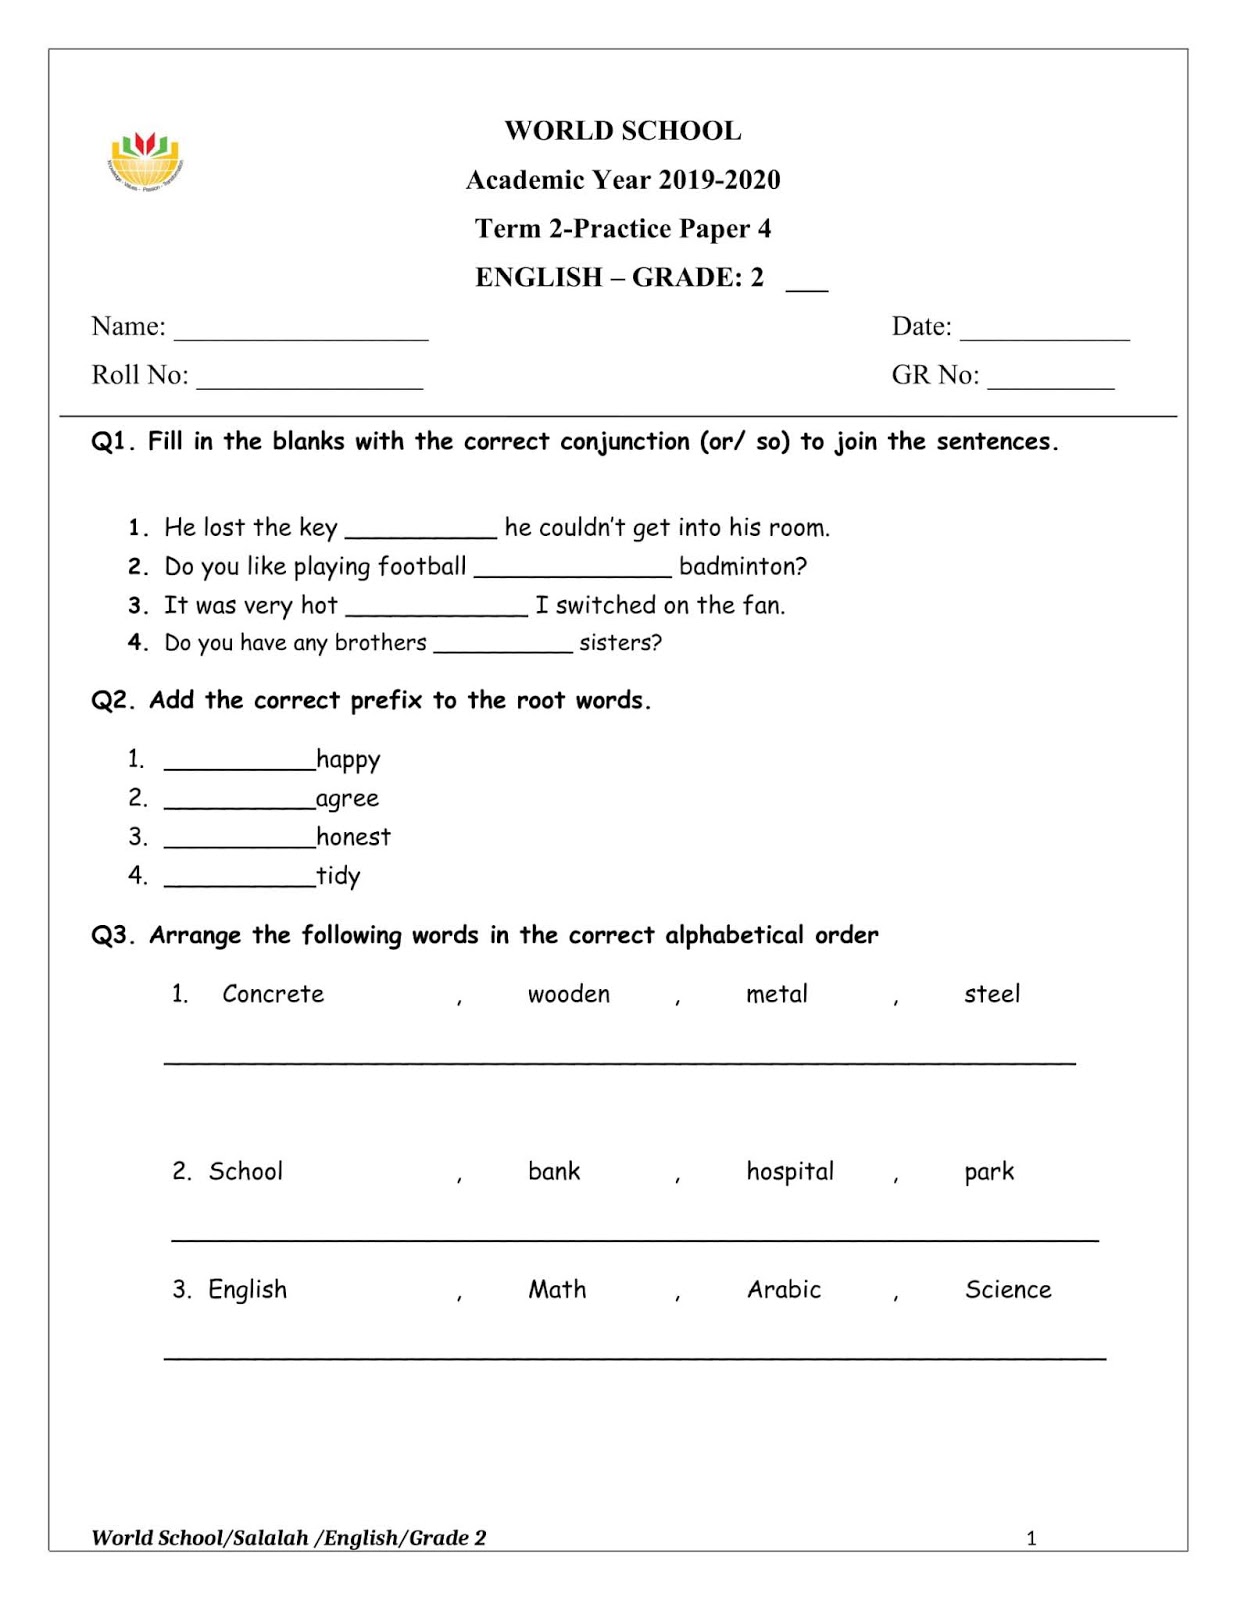 birla-world-school-oman-homework-for-grade-2-as-on-24-03-2020